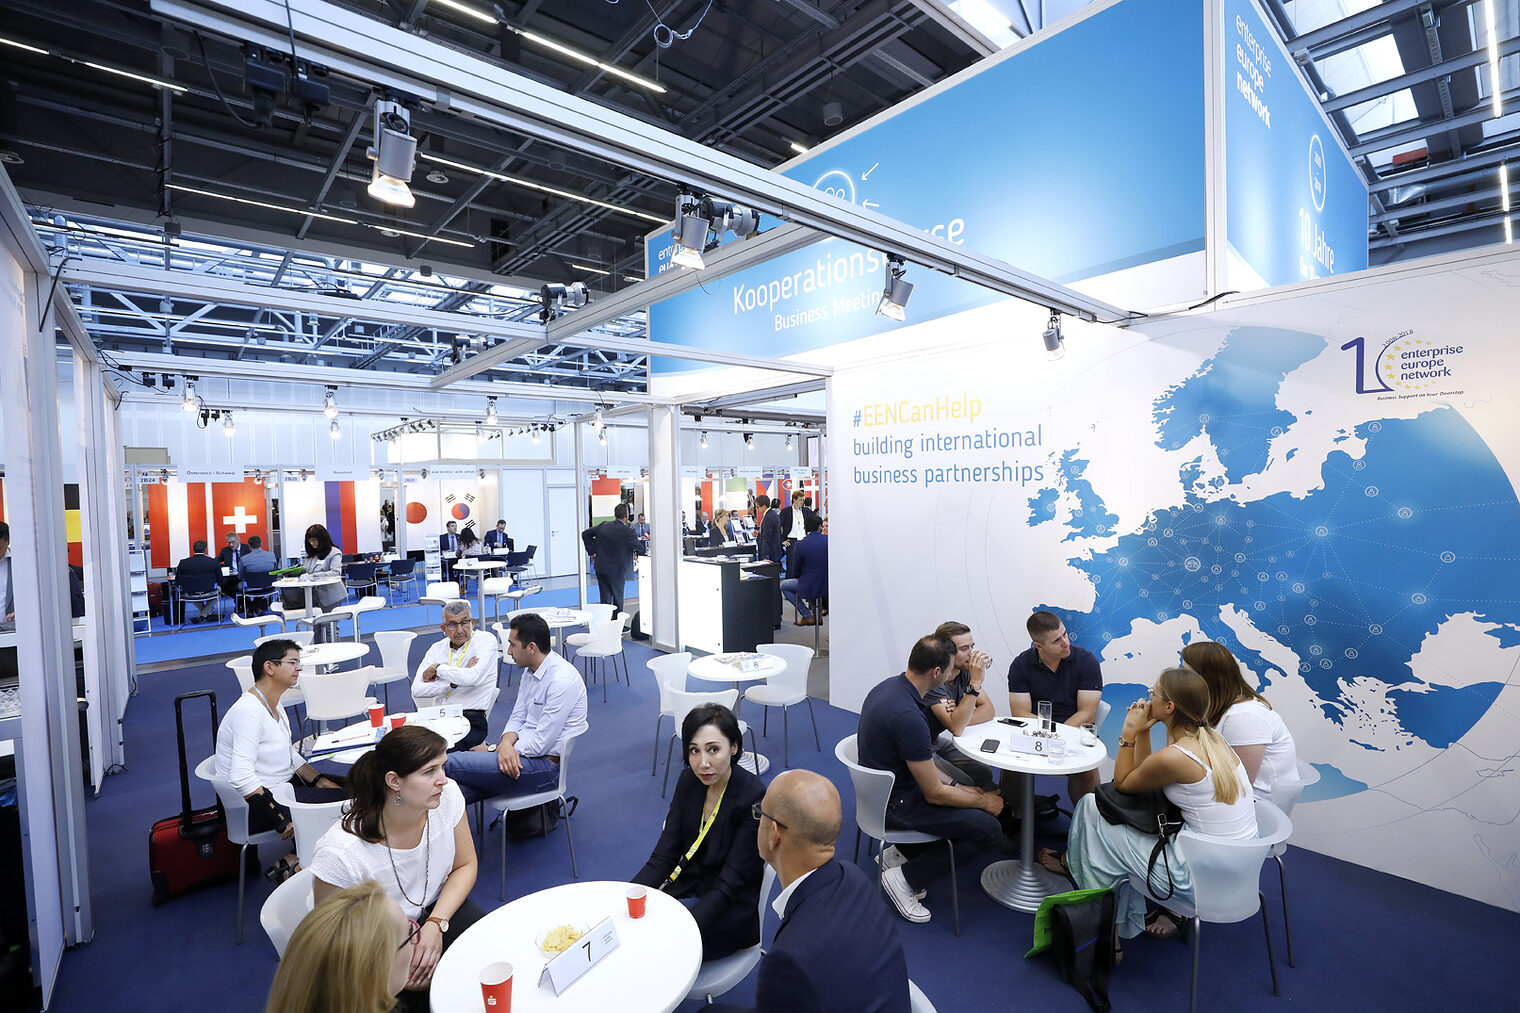 Kooperationsbörse Global Connect Handwerk International Enterprise Europe Network